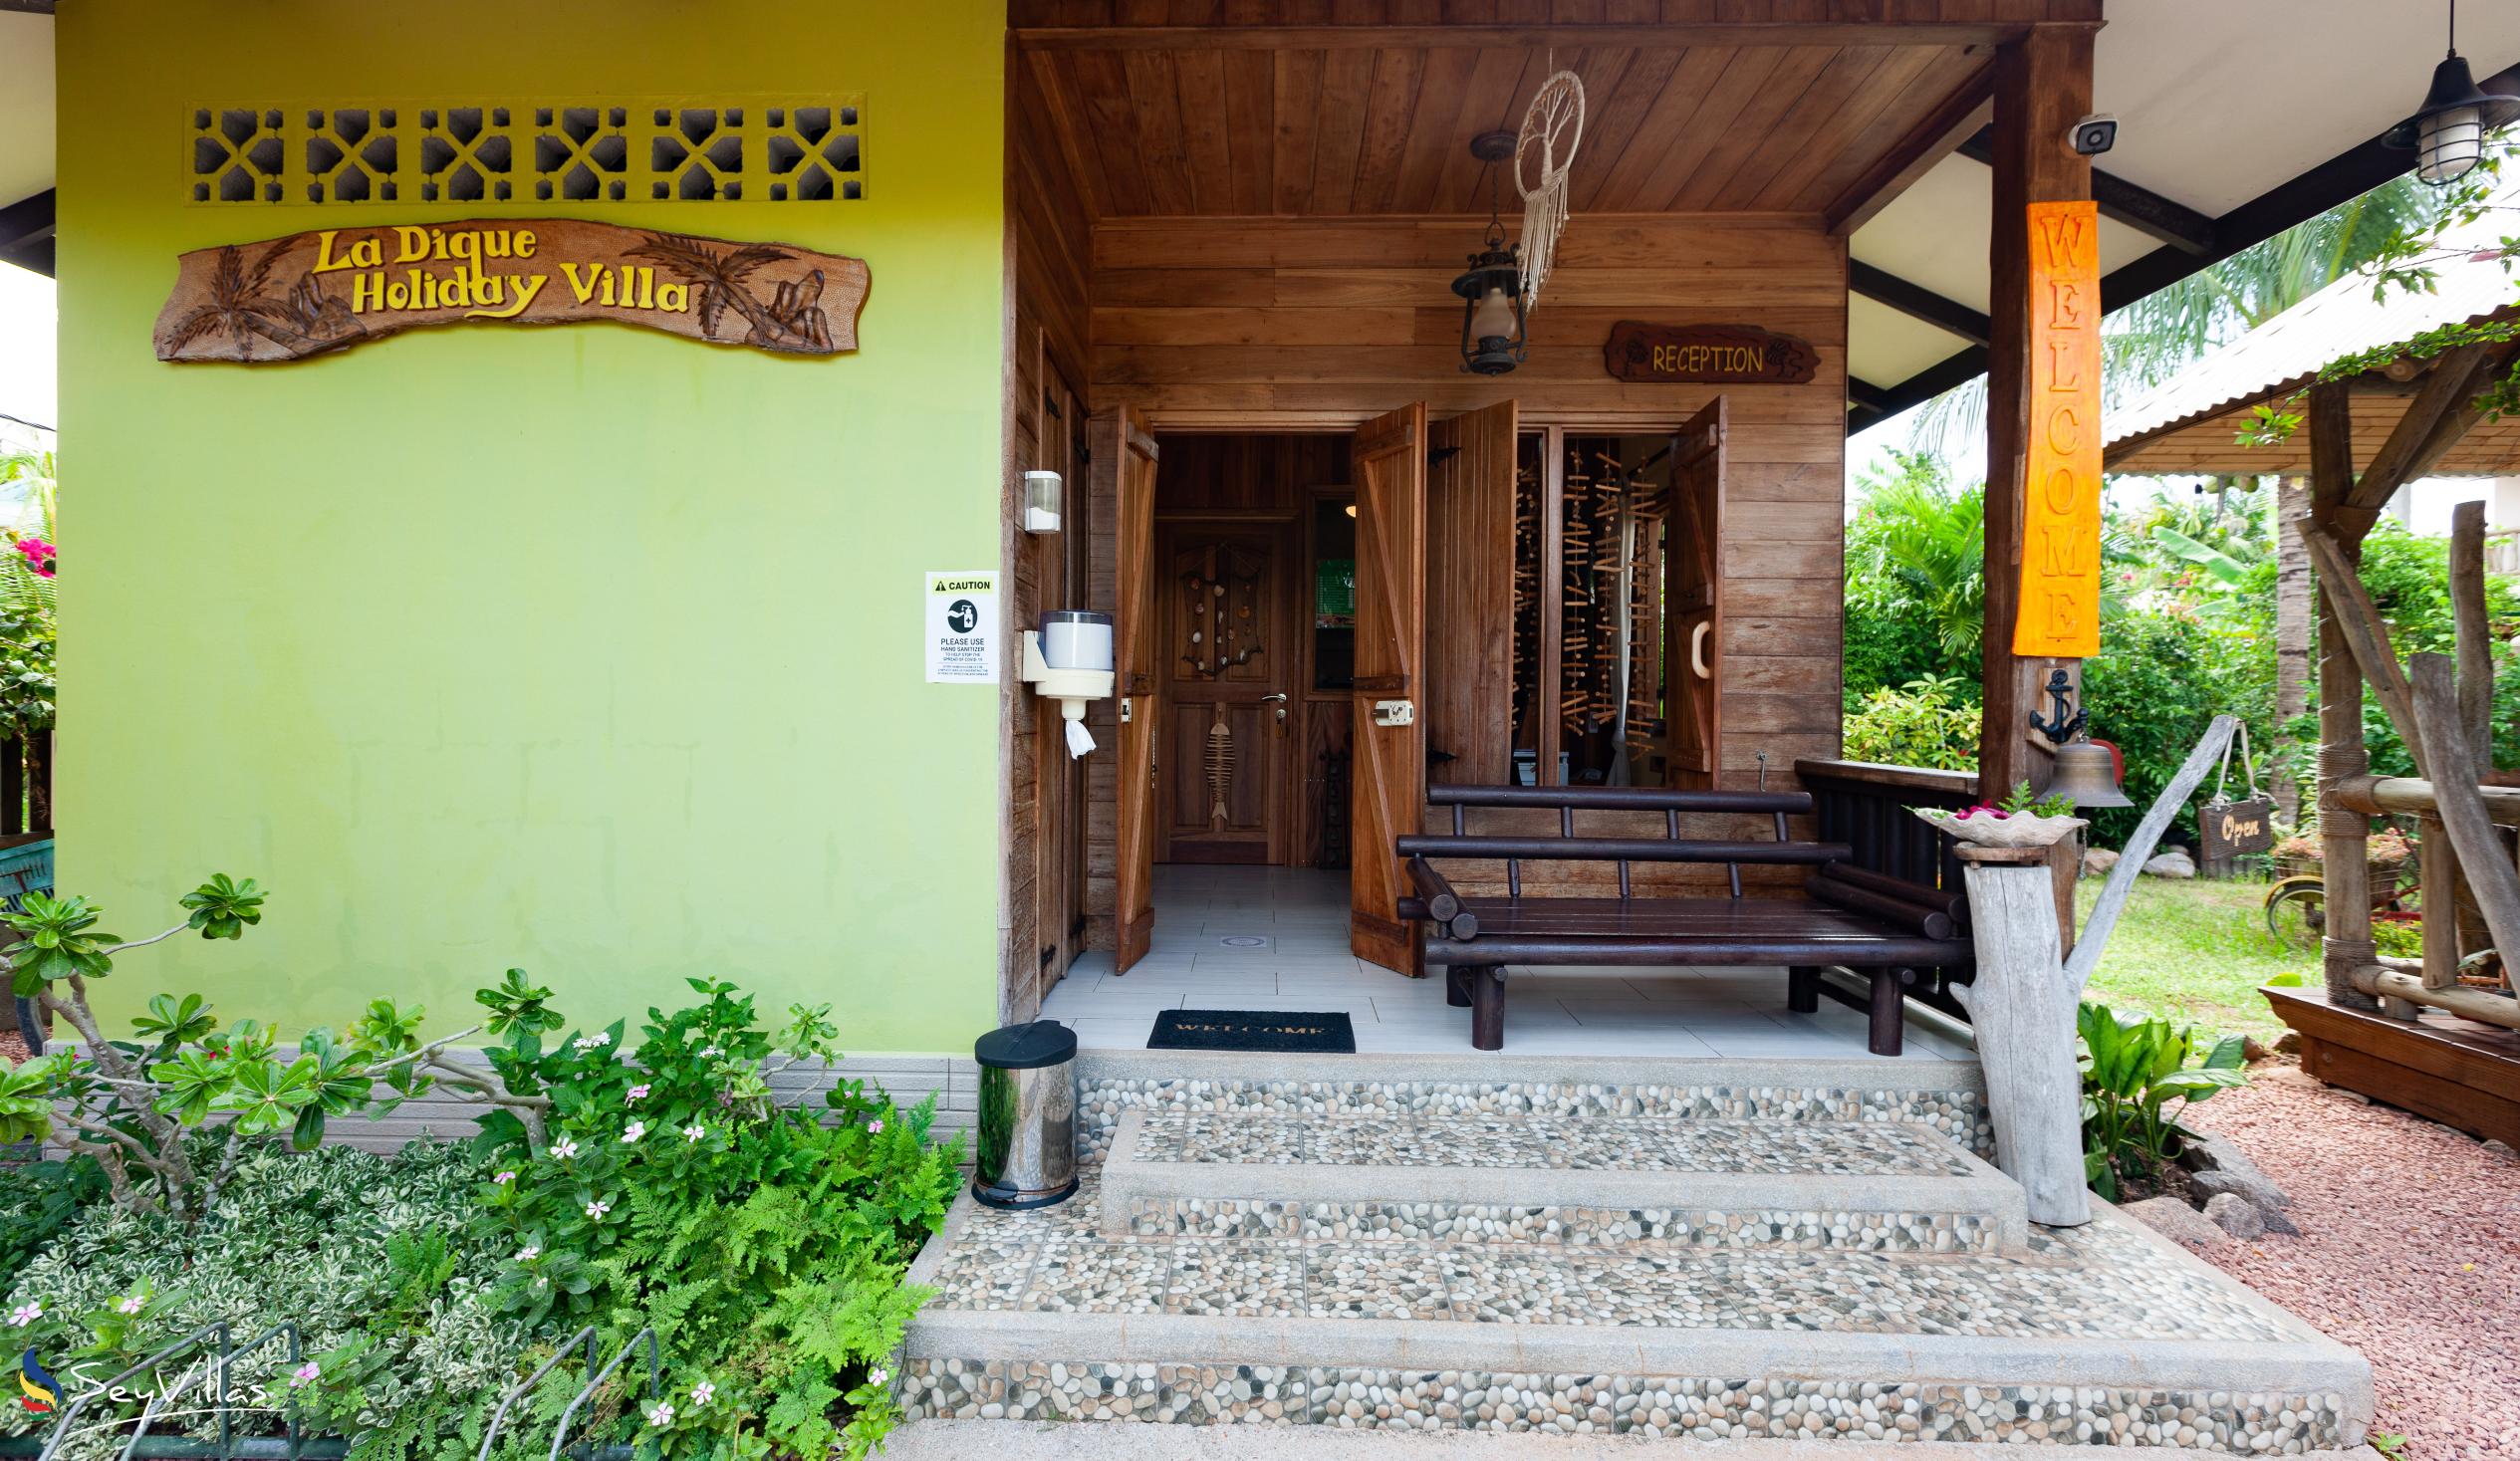 Foto 34: La Digue Holiday Villa - Intérieur - La Digue (Seychelles)